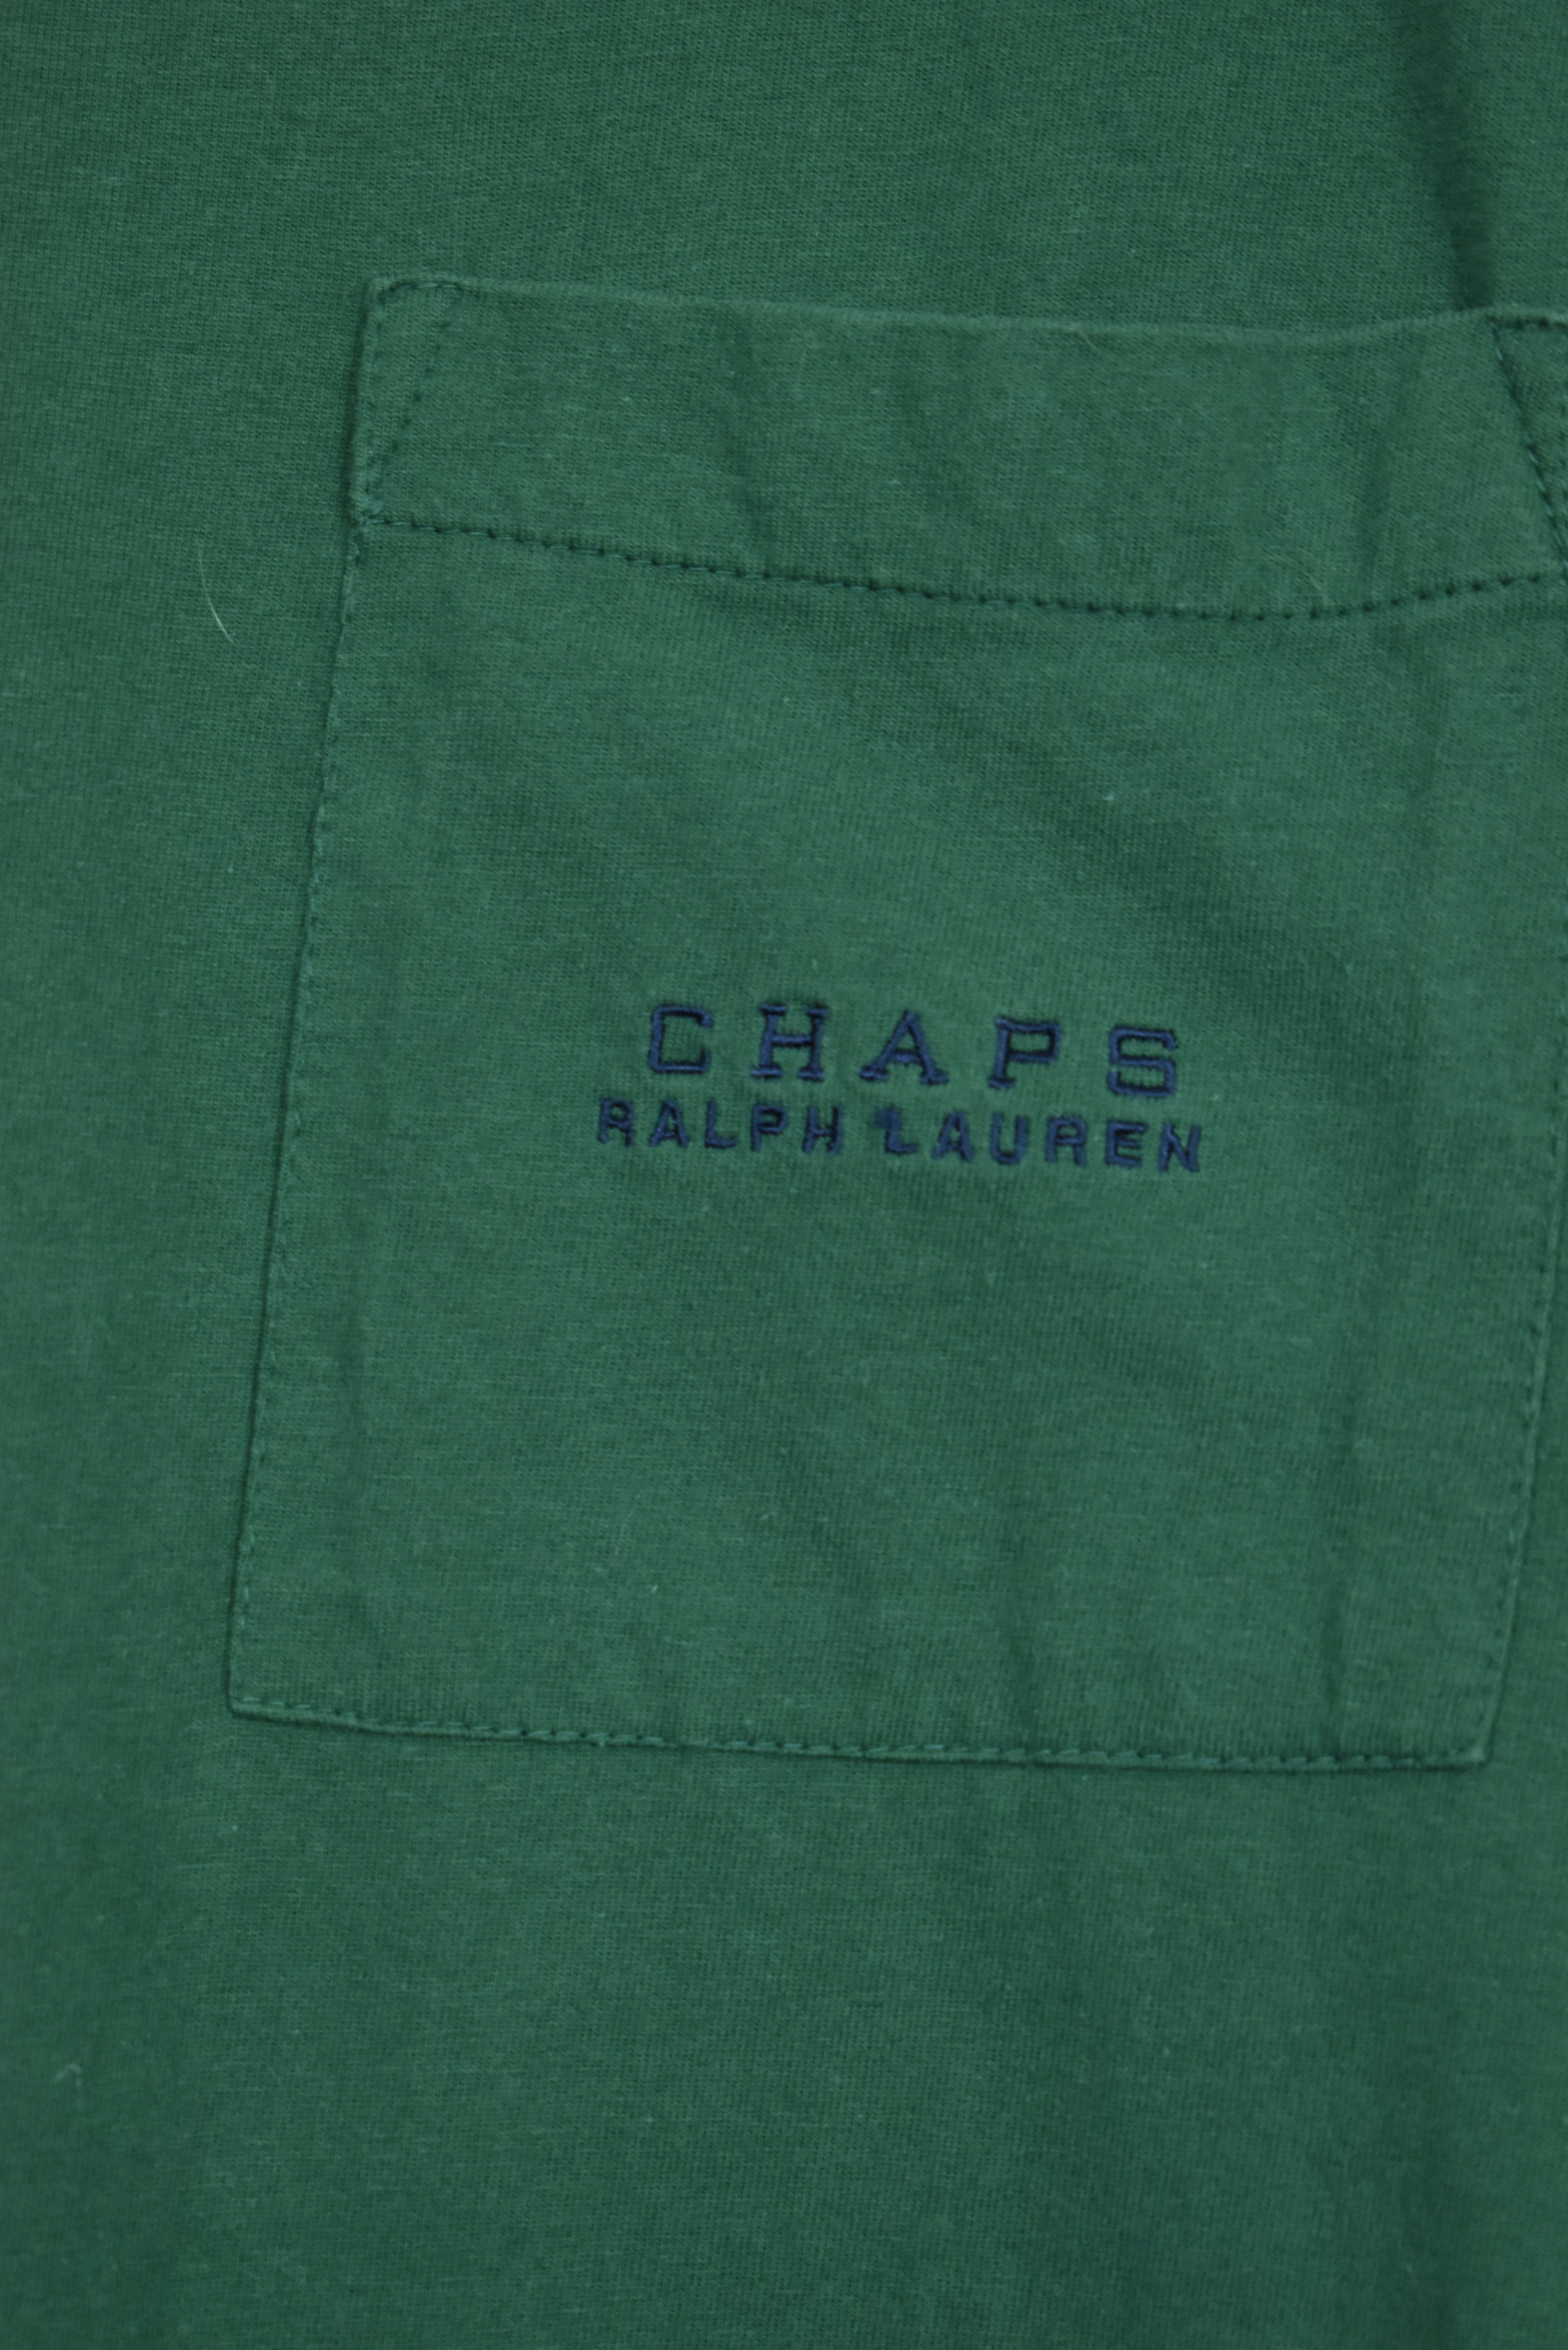 Vintage Chaps Ralph Lauren Forrest Green Pocket T Shirt Large